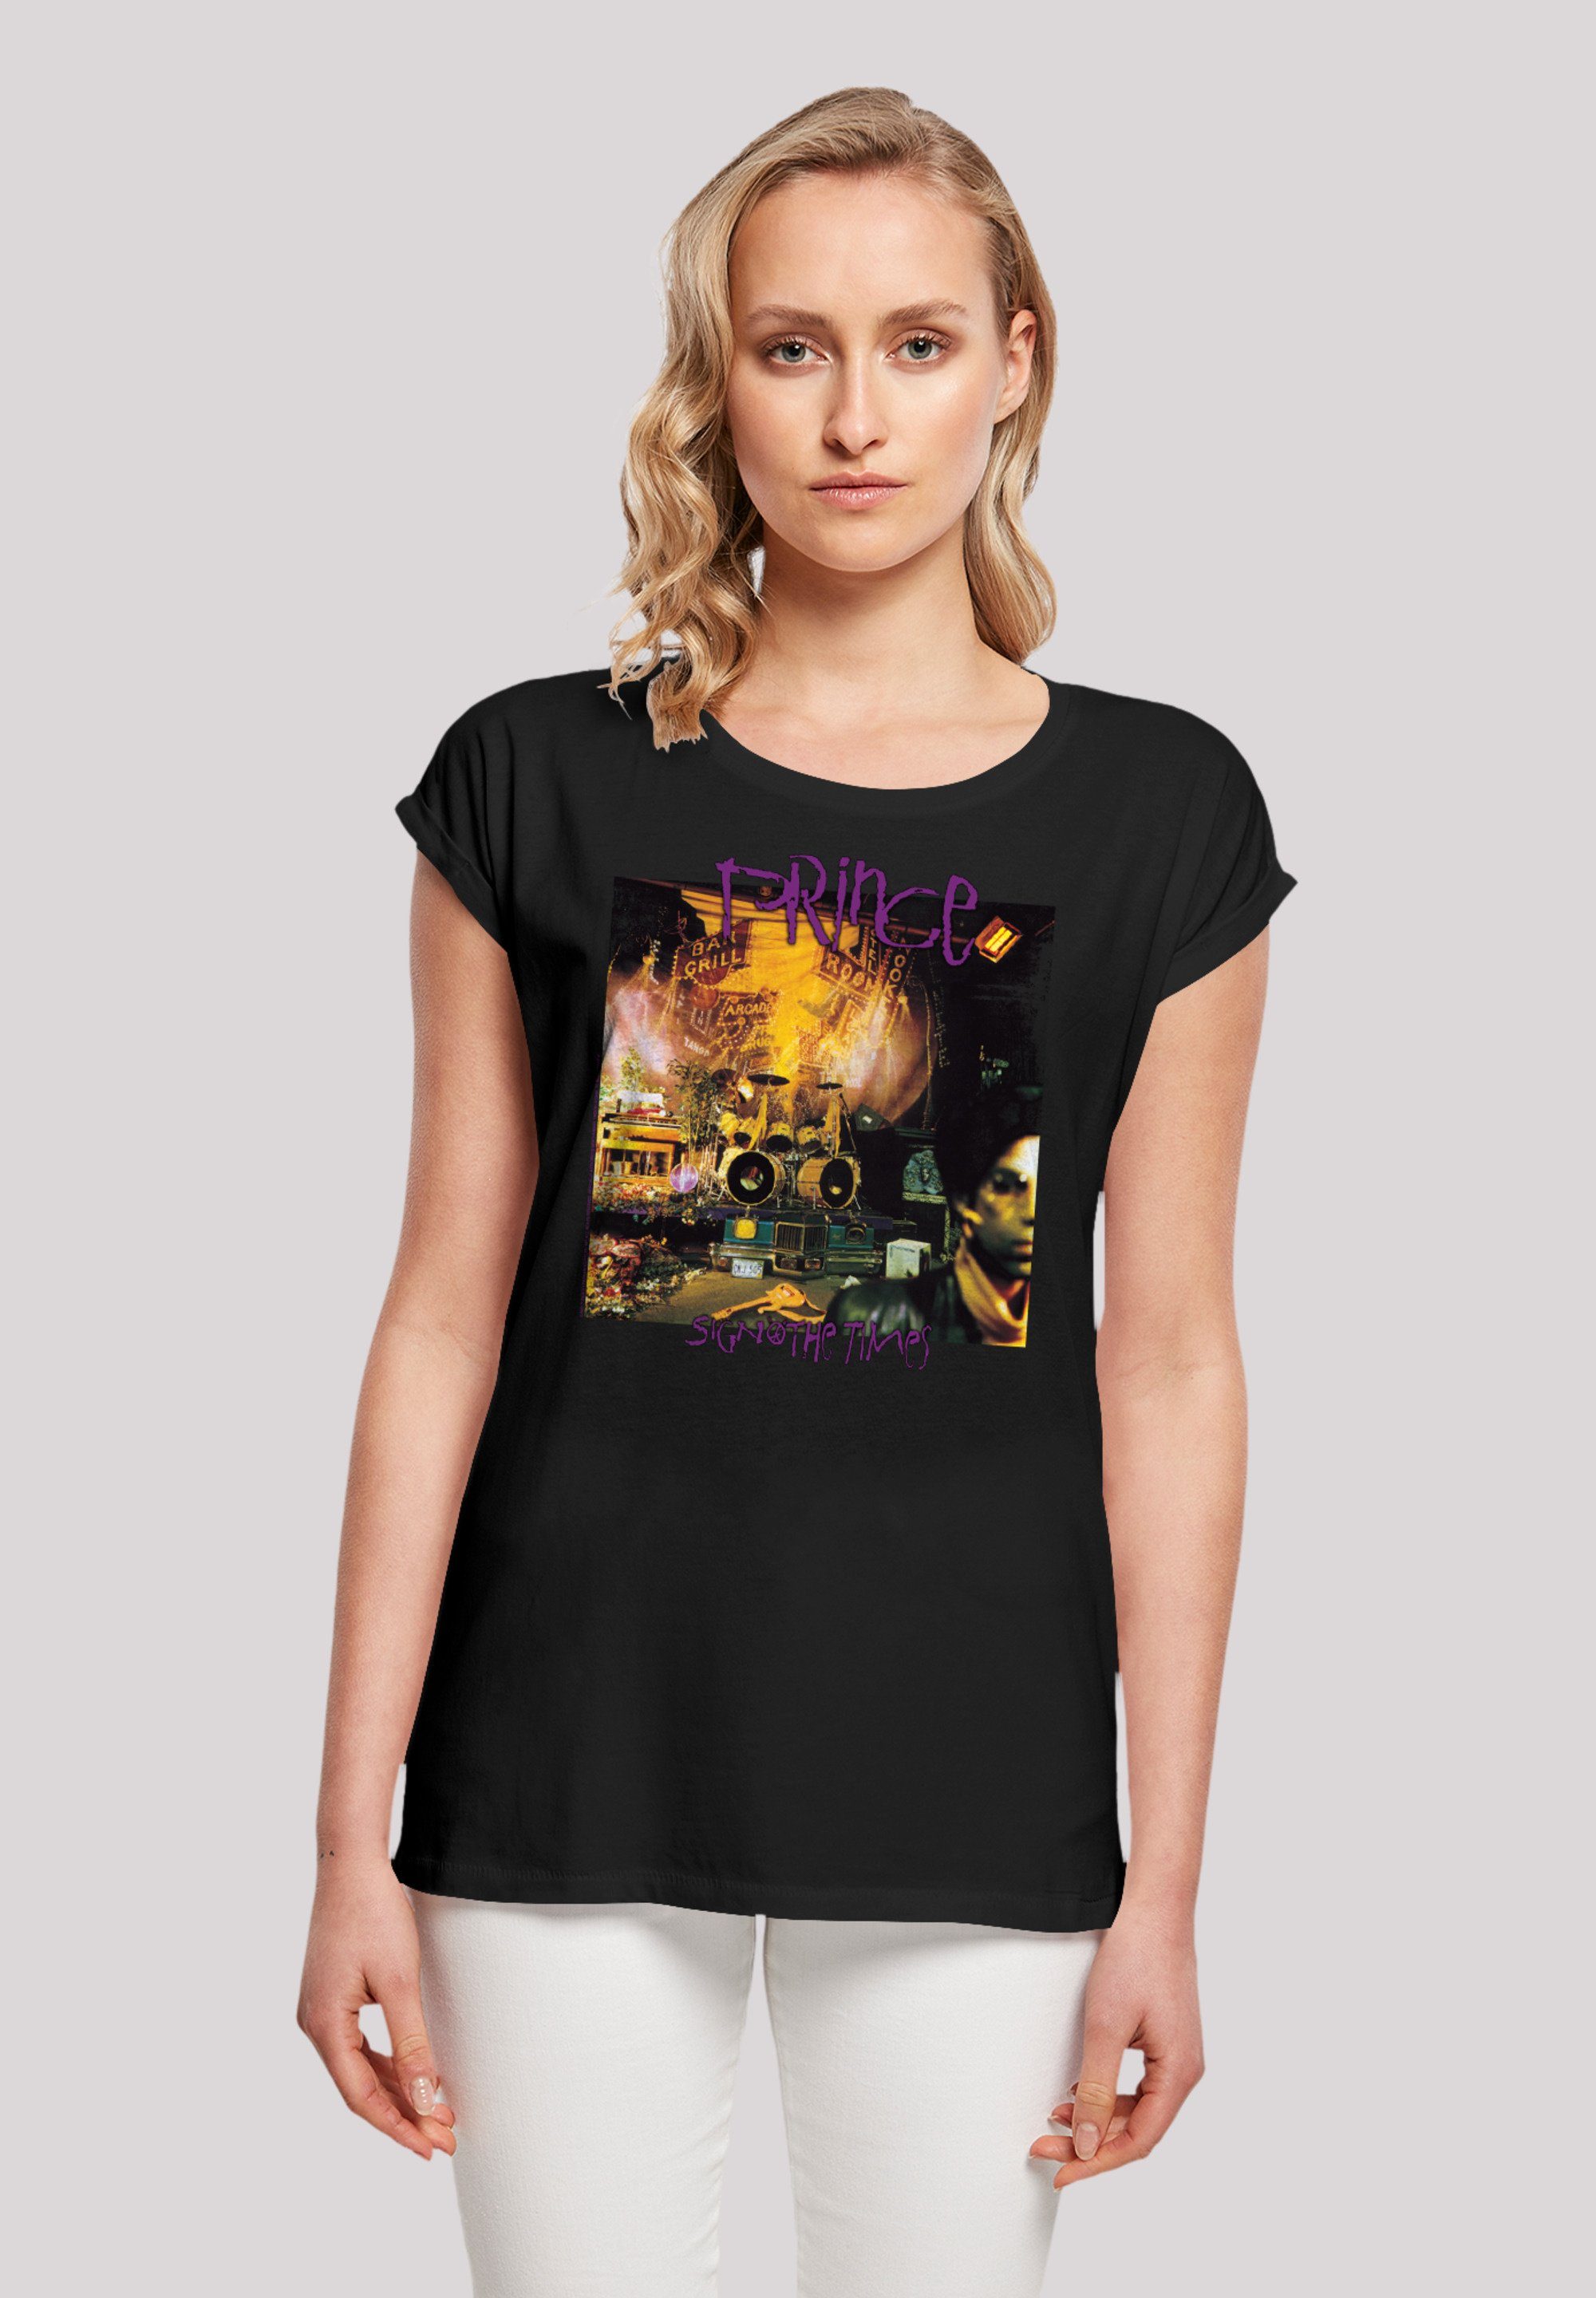 Times T-Shirt Band F4NT4STIC Rock-Musik, The Premium Qualität, Musik O' Prince Sign